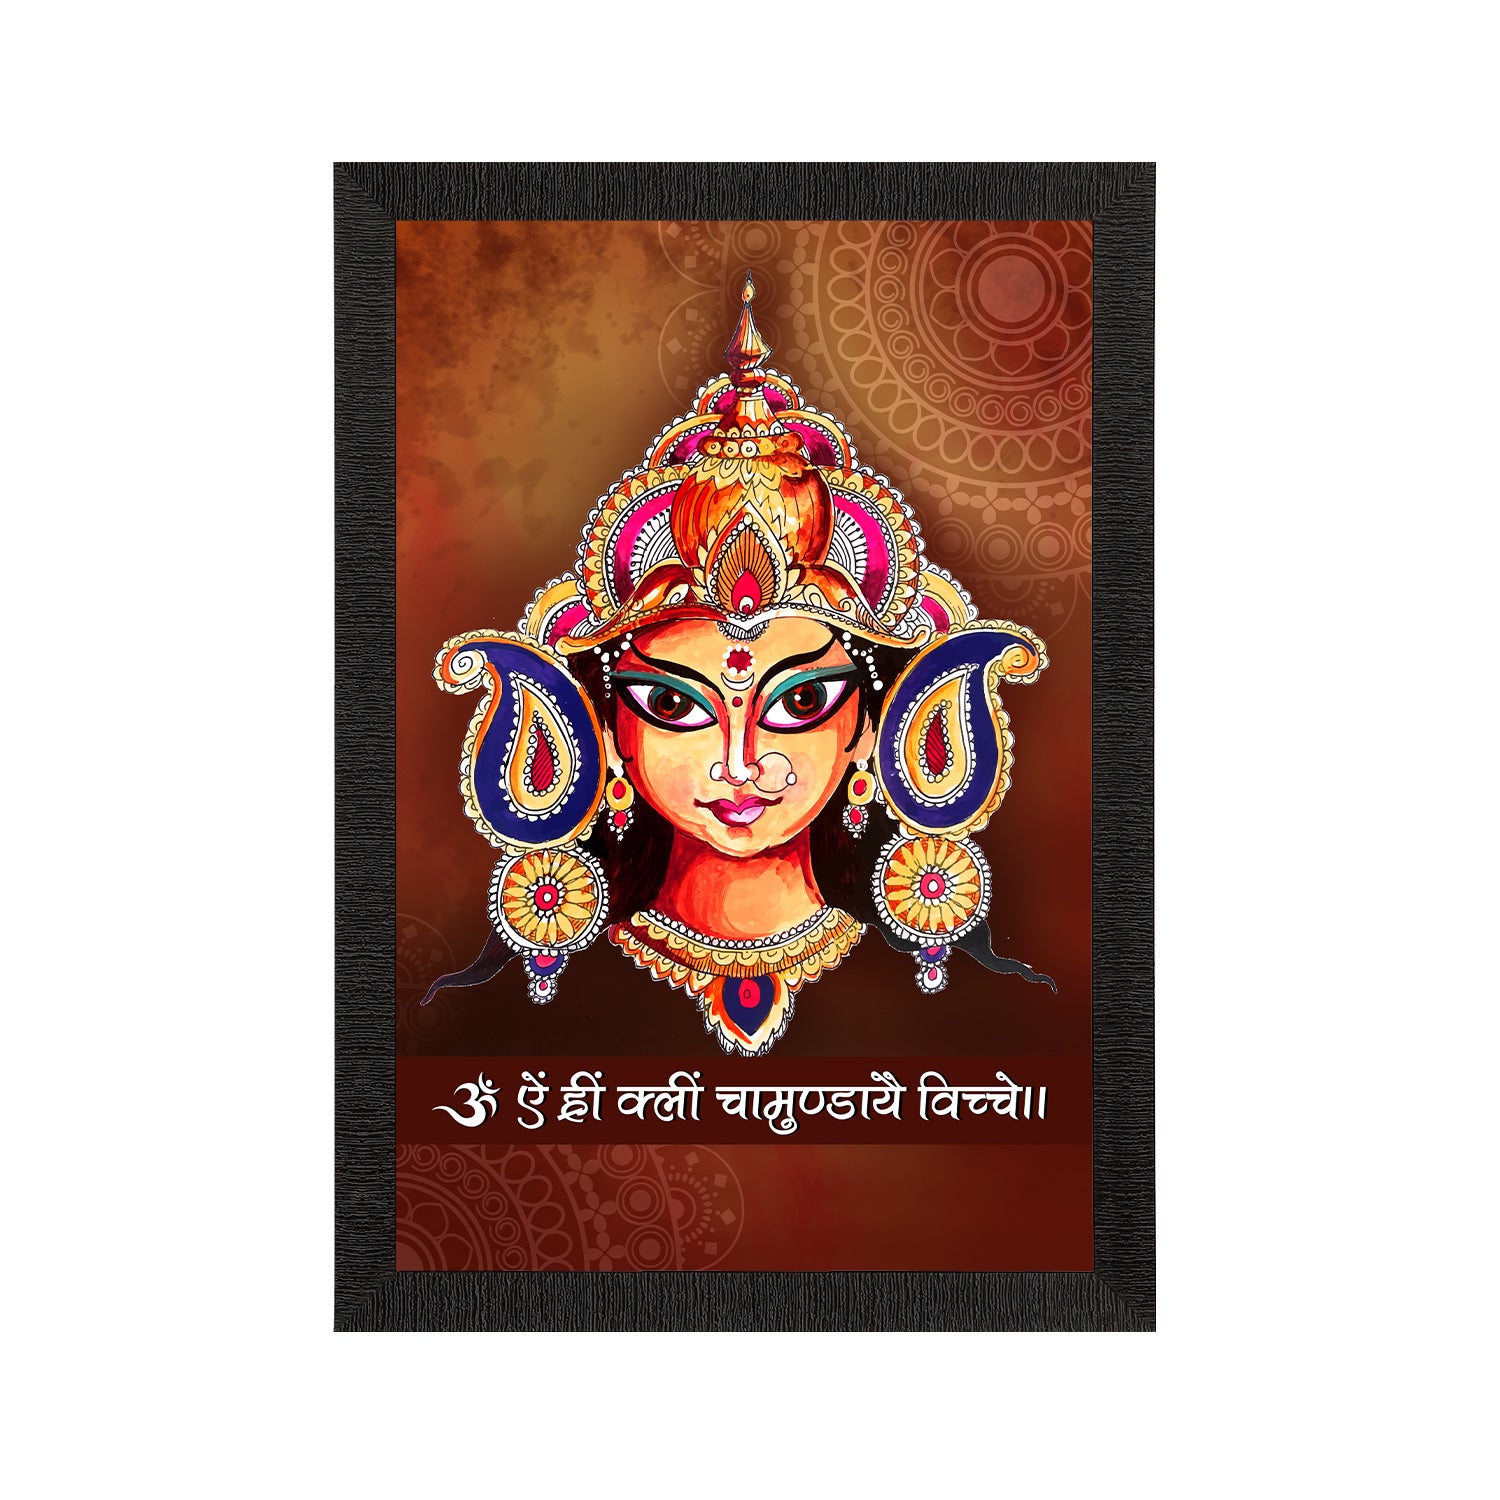 Durga Maa Painting With Om Aim Hrim Klim Chamundaye Viche Mantra Digital Printed Religious Wall Art